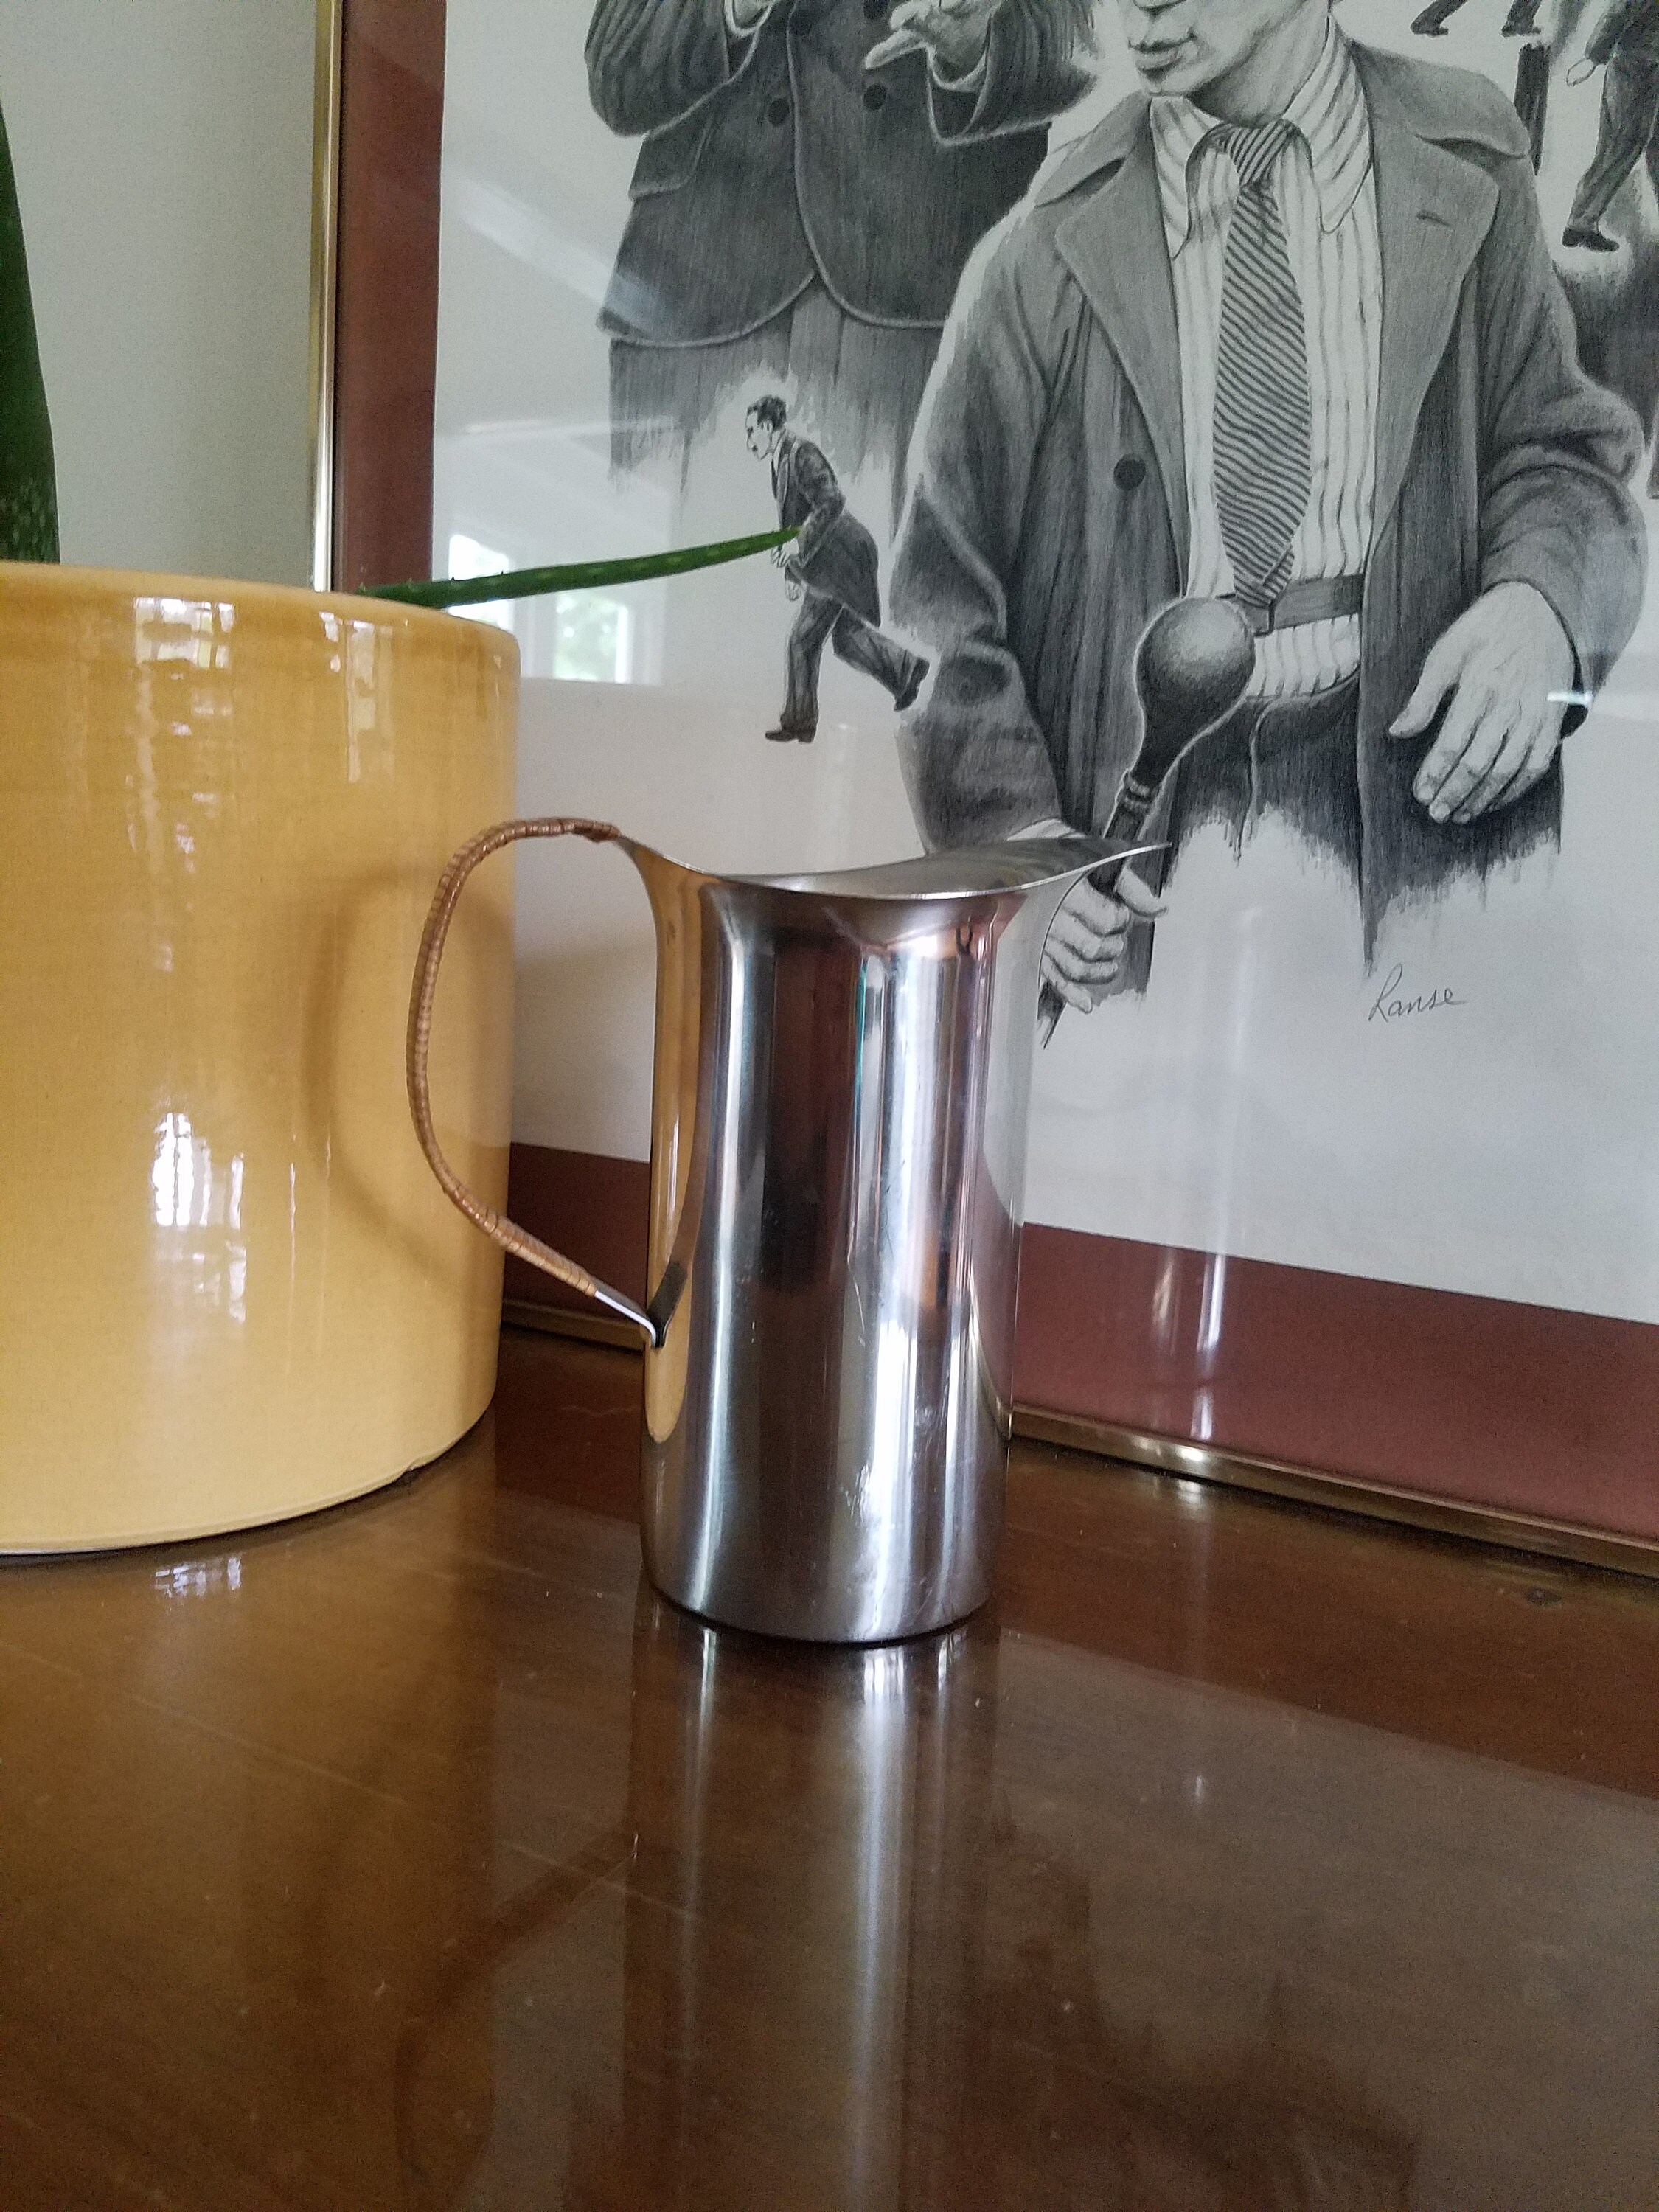 INOXPRAN Collection Coffee Maker, Plus Milk Jug, in 18/10 Stainless Steel  Height 20 Cm Base Diameter 11.7cm Weight 632 Grams Capacity 350 Ml 